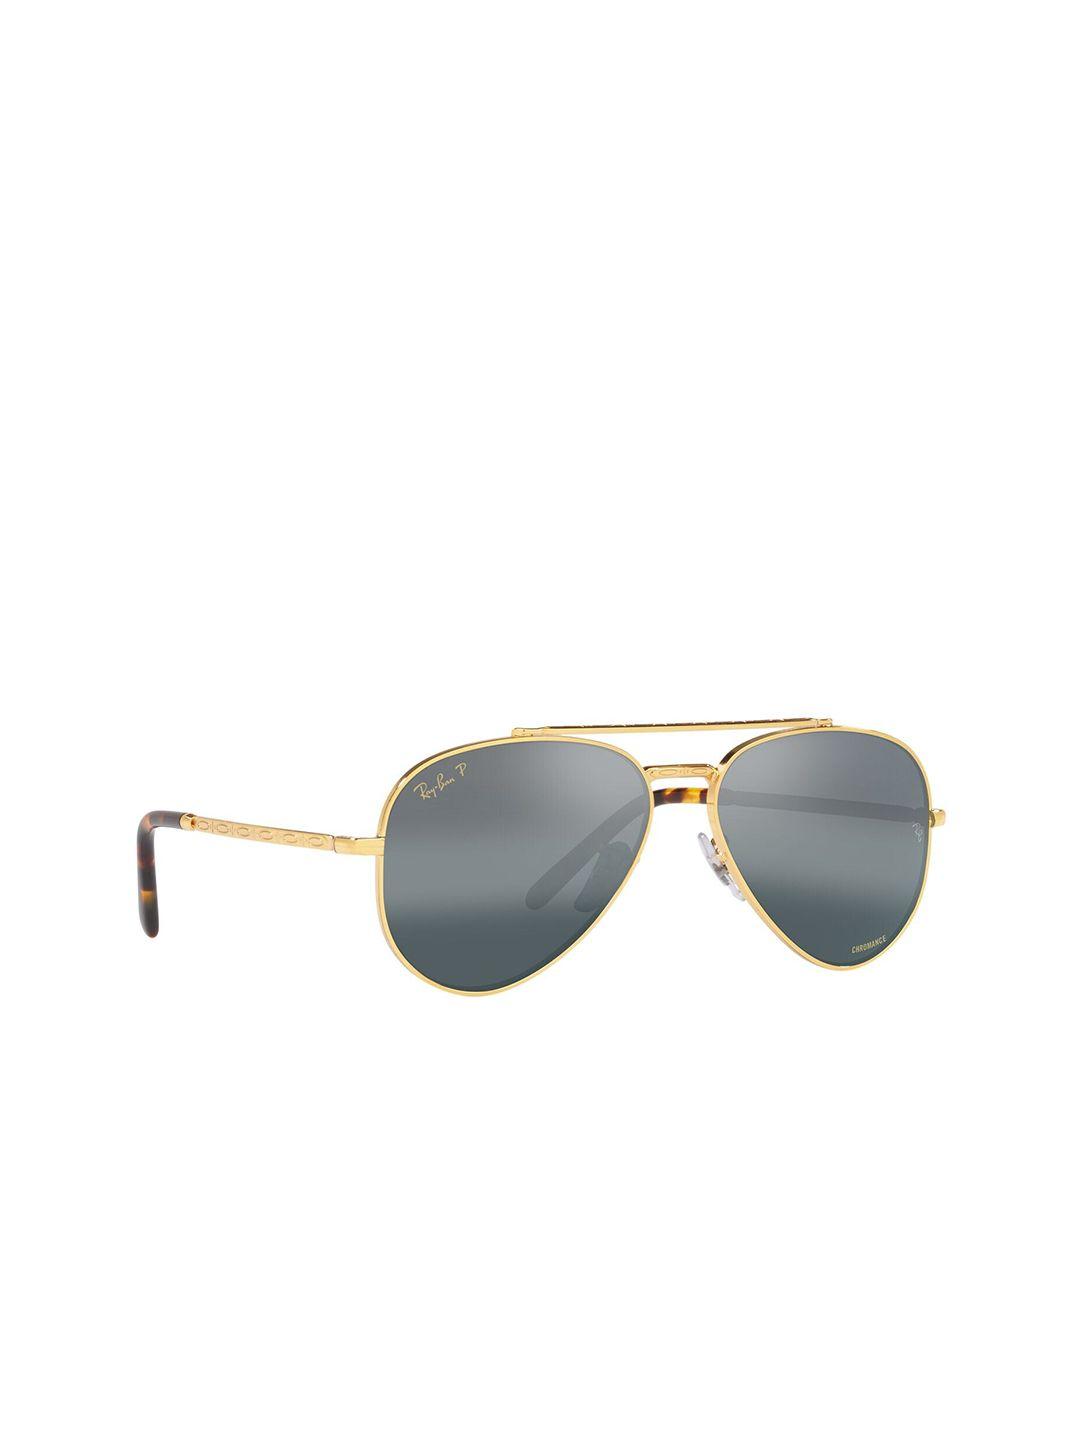 ray-ban aviator sunglasses with polarised lens 8056597665117